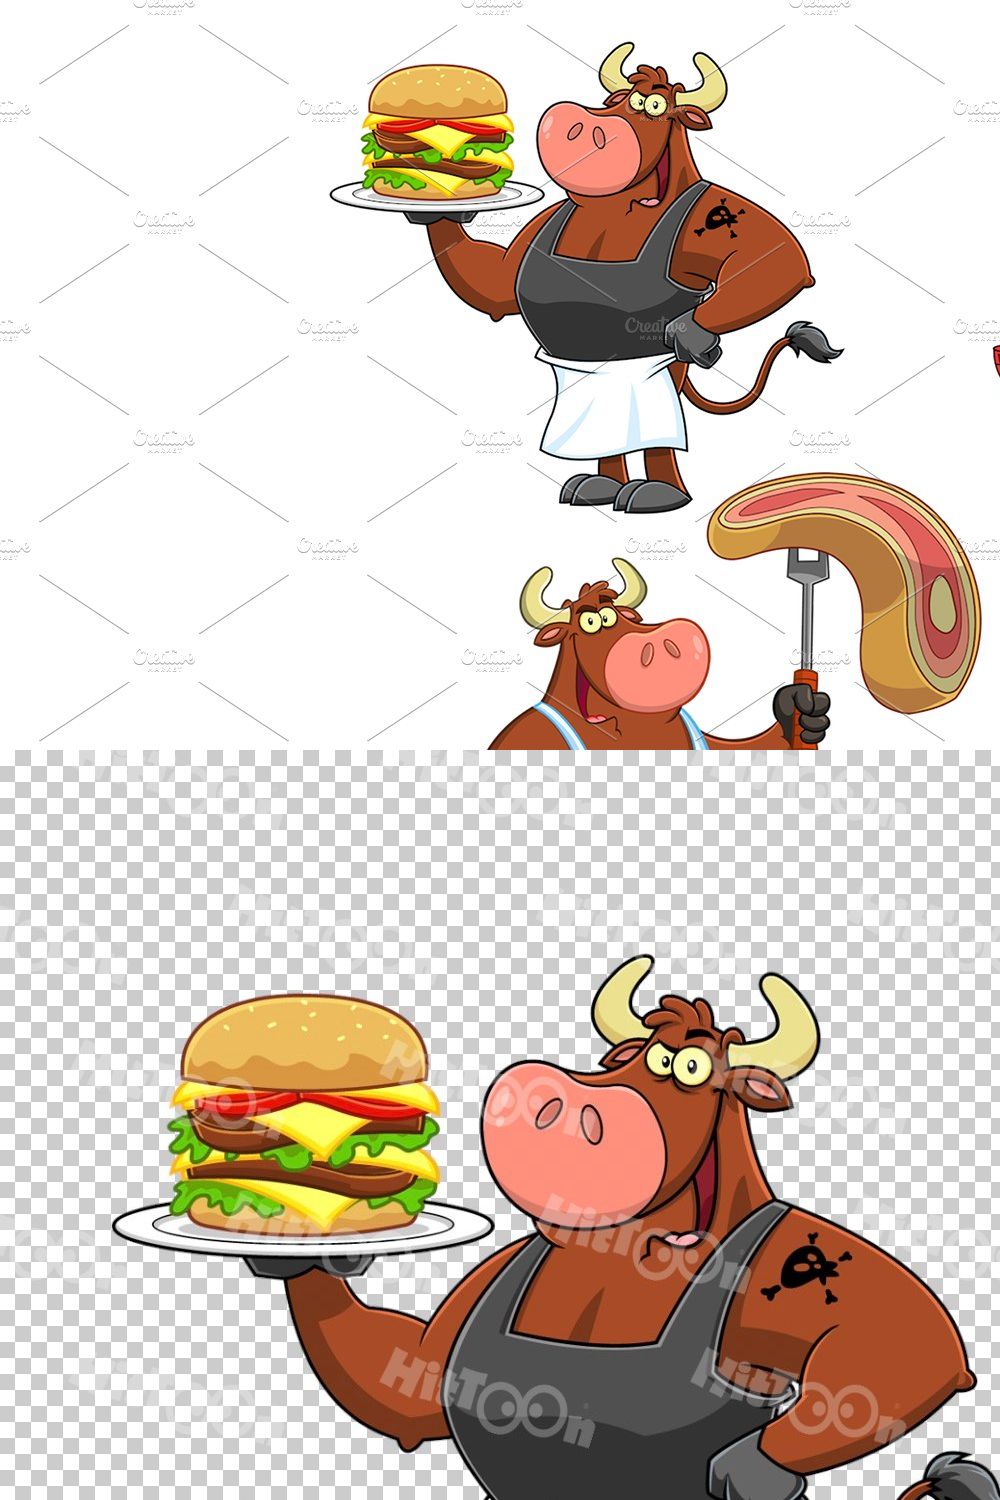 Bull Cartoon Mascot Character 3 pinterest preview image.